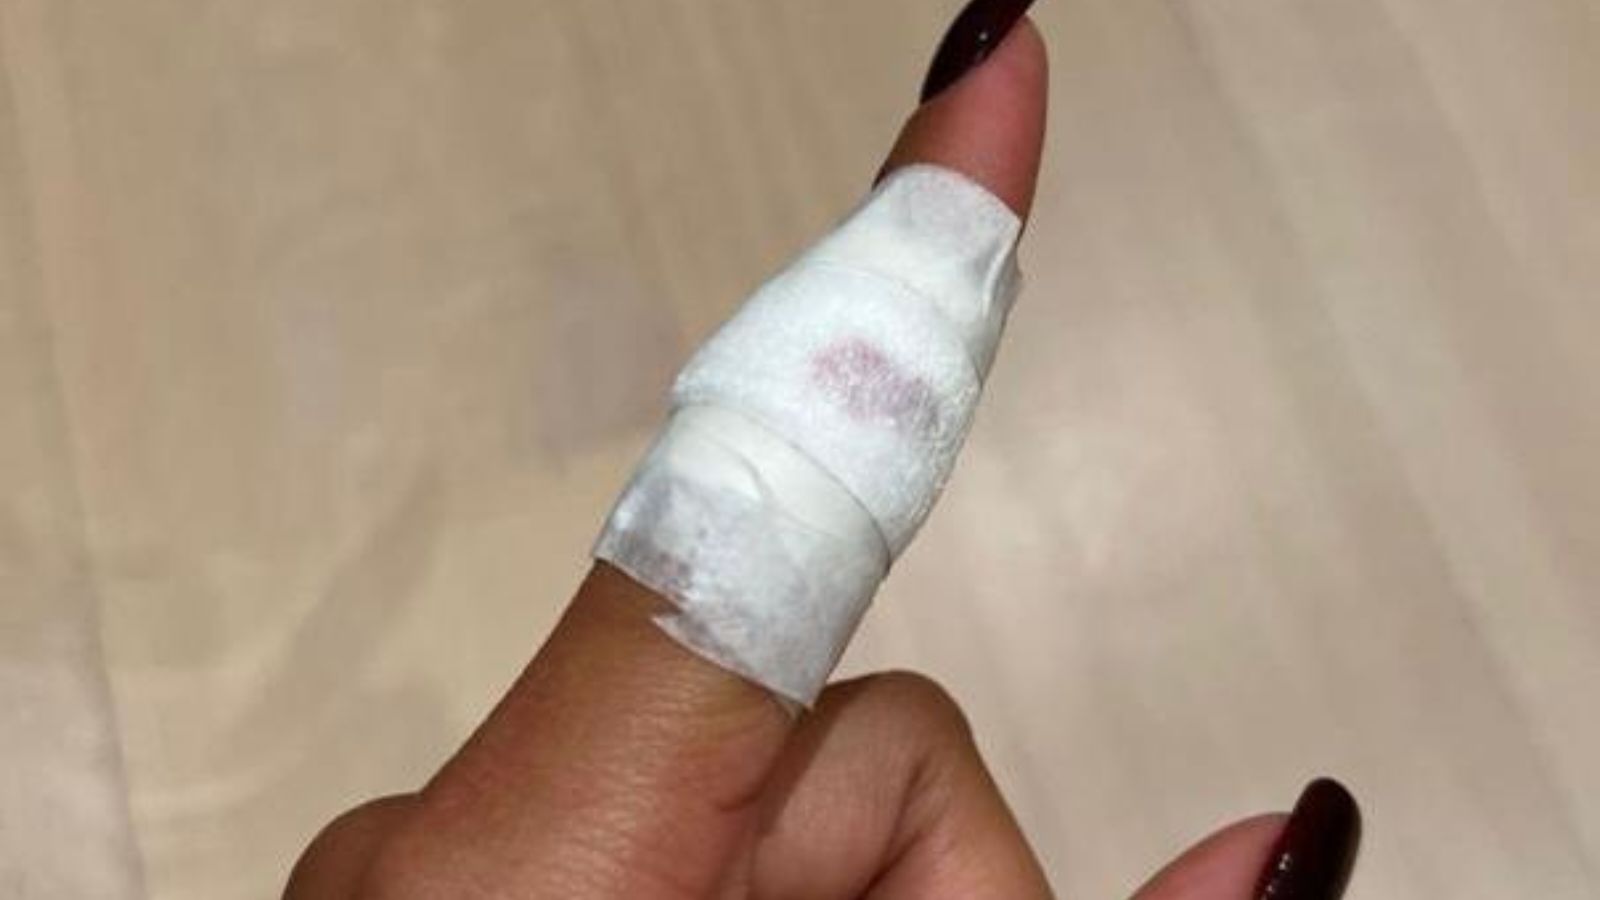 Zendaya injures her finger in a recent accident